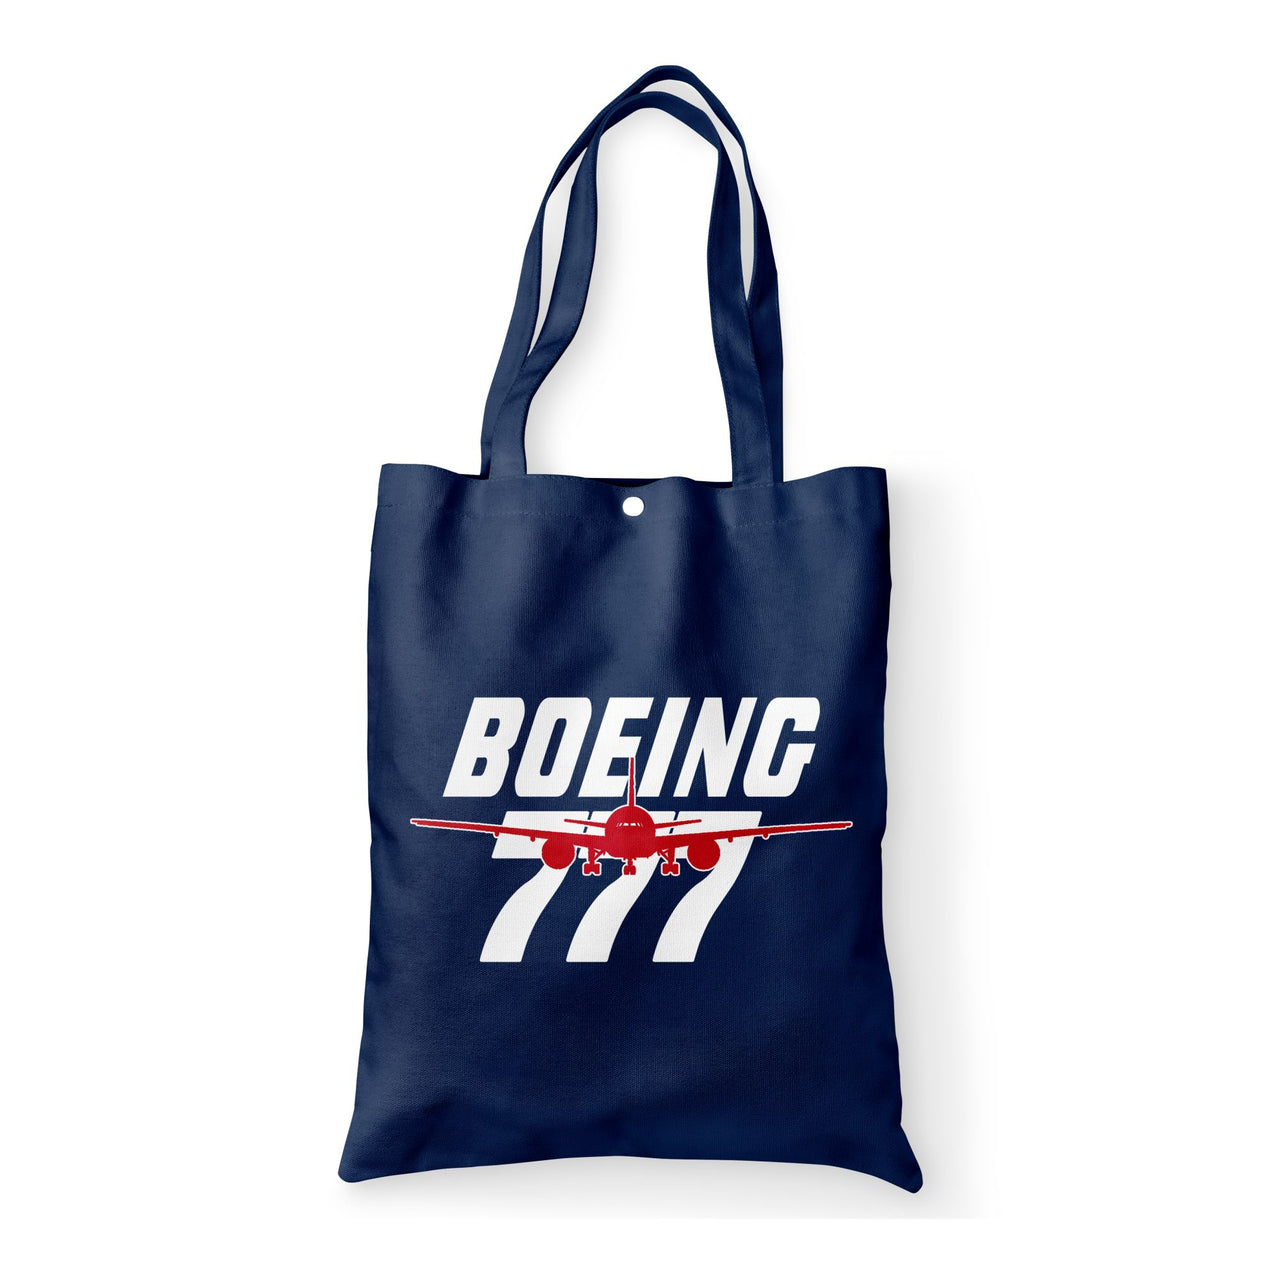 Amazing Boeing 777 Designed Tote Bags